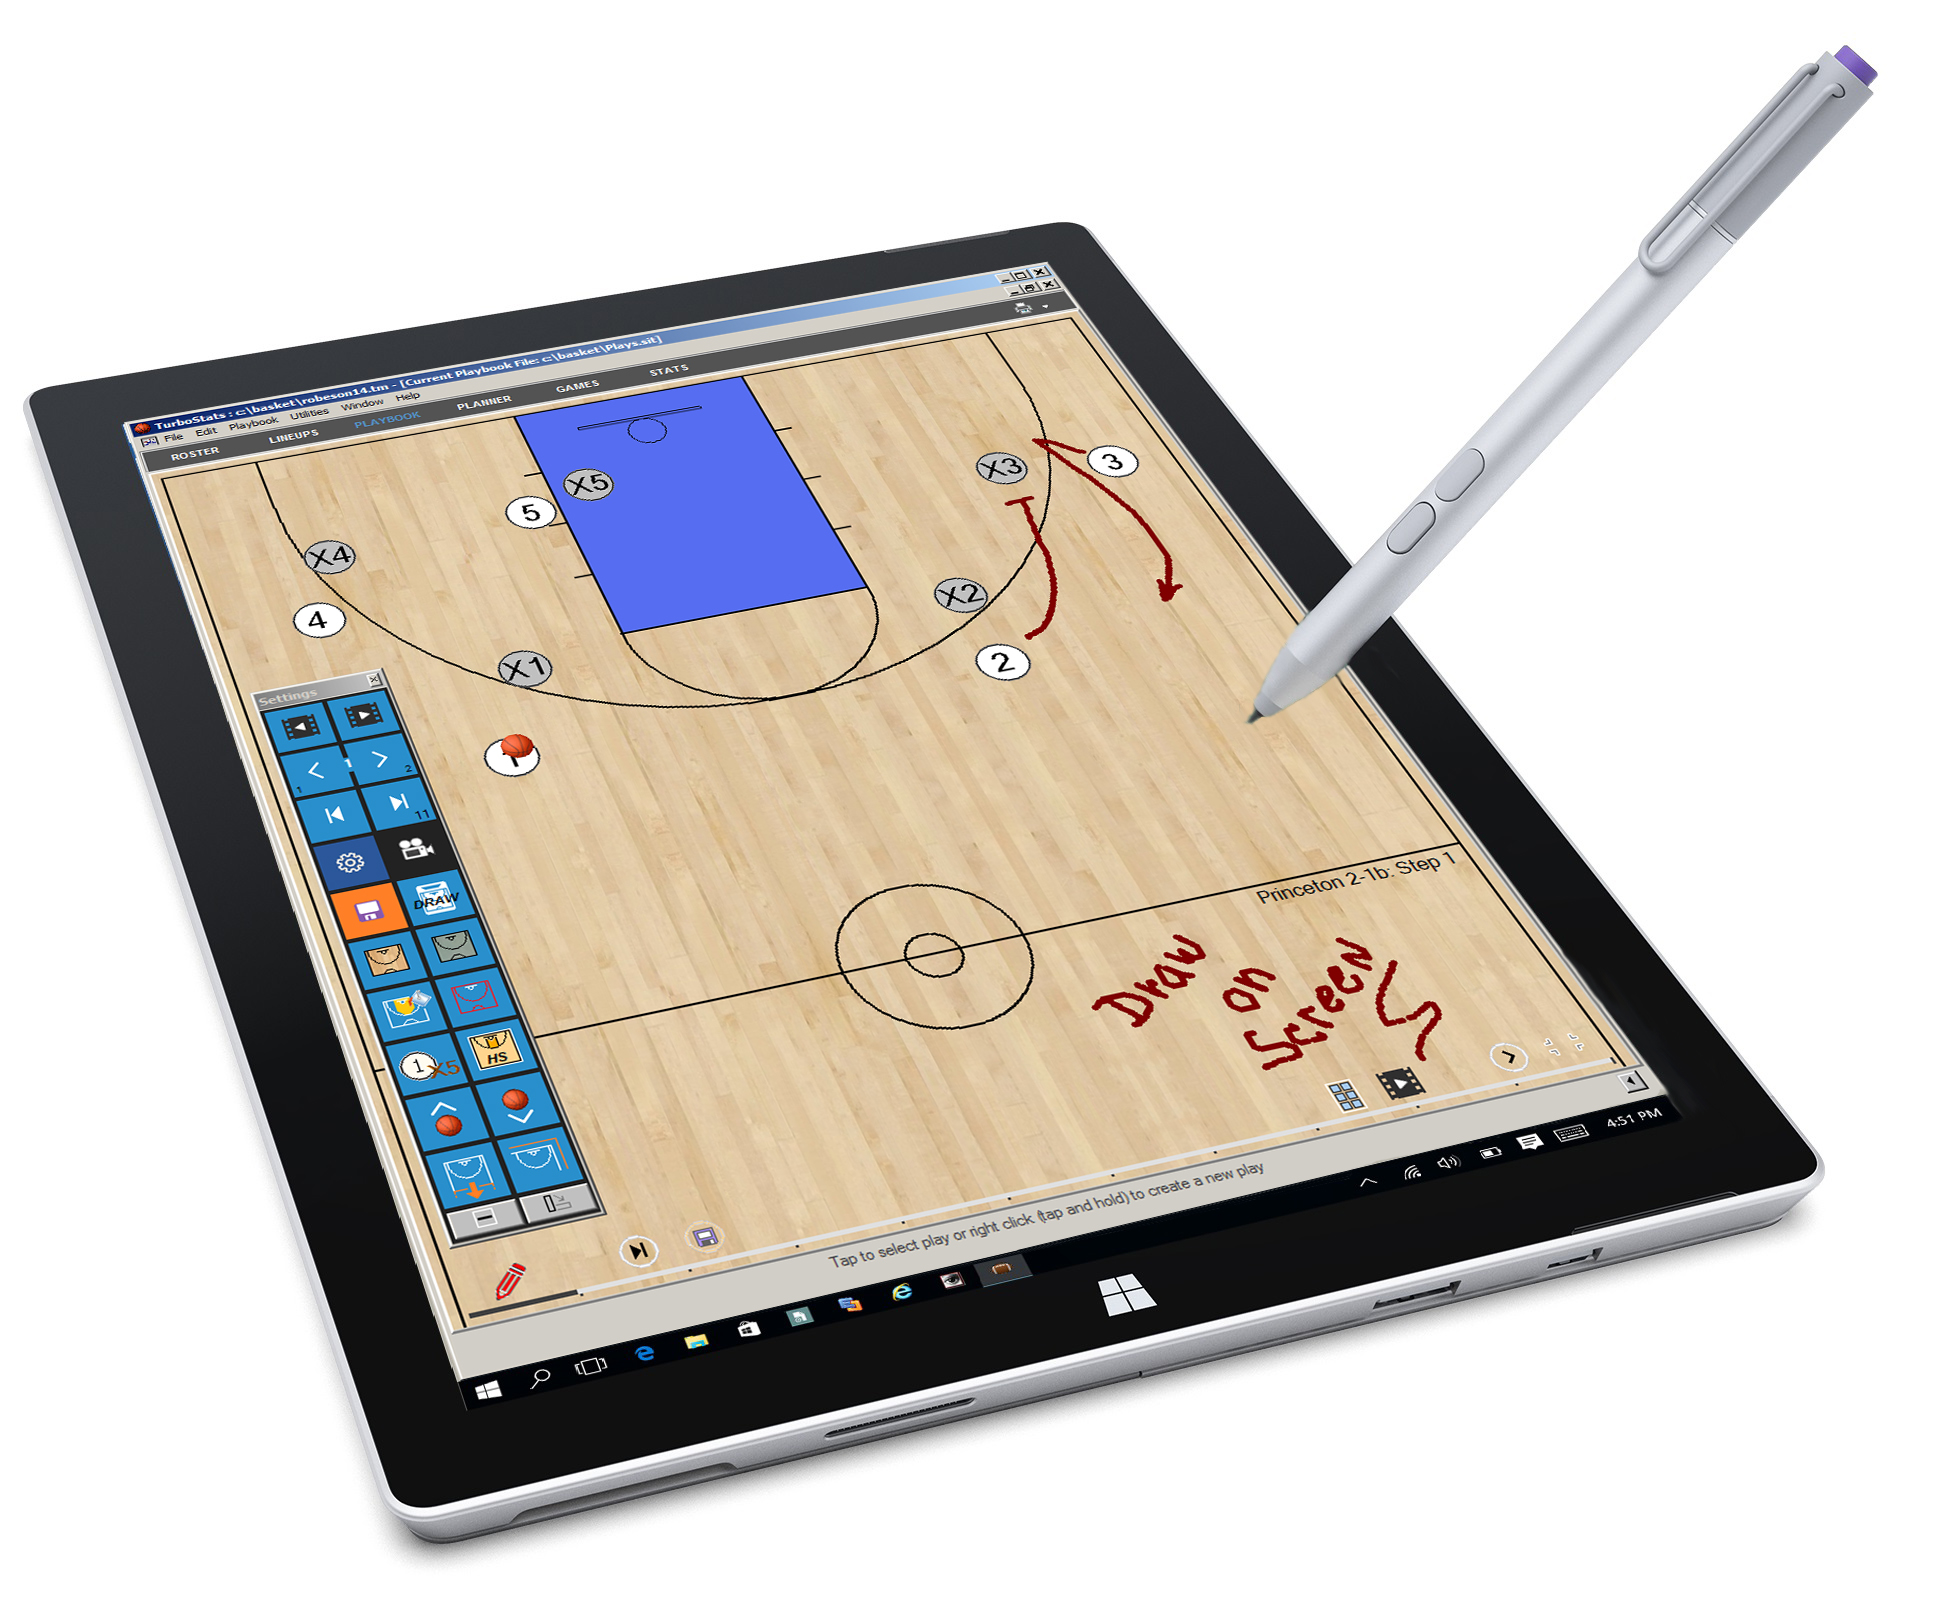 Basketball Animated Playbook Diagramming Software